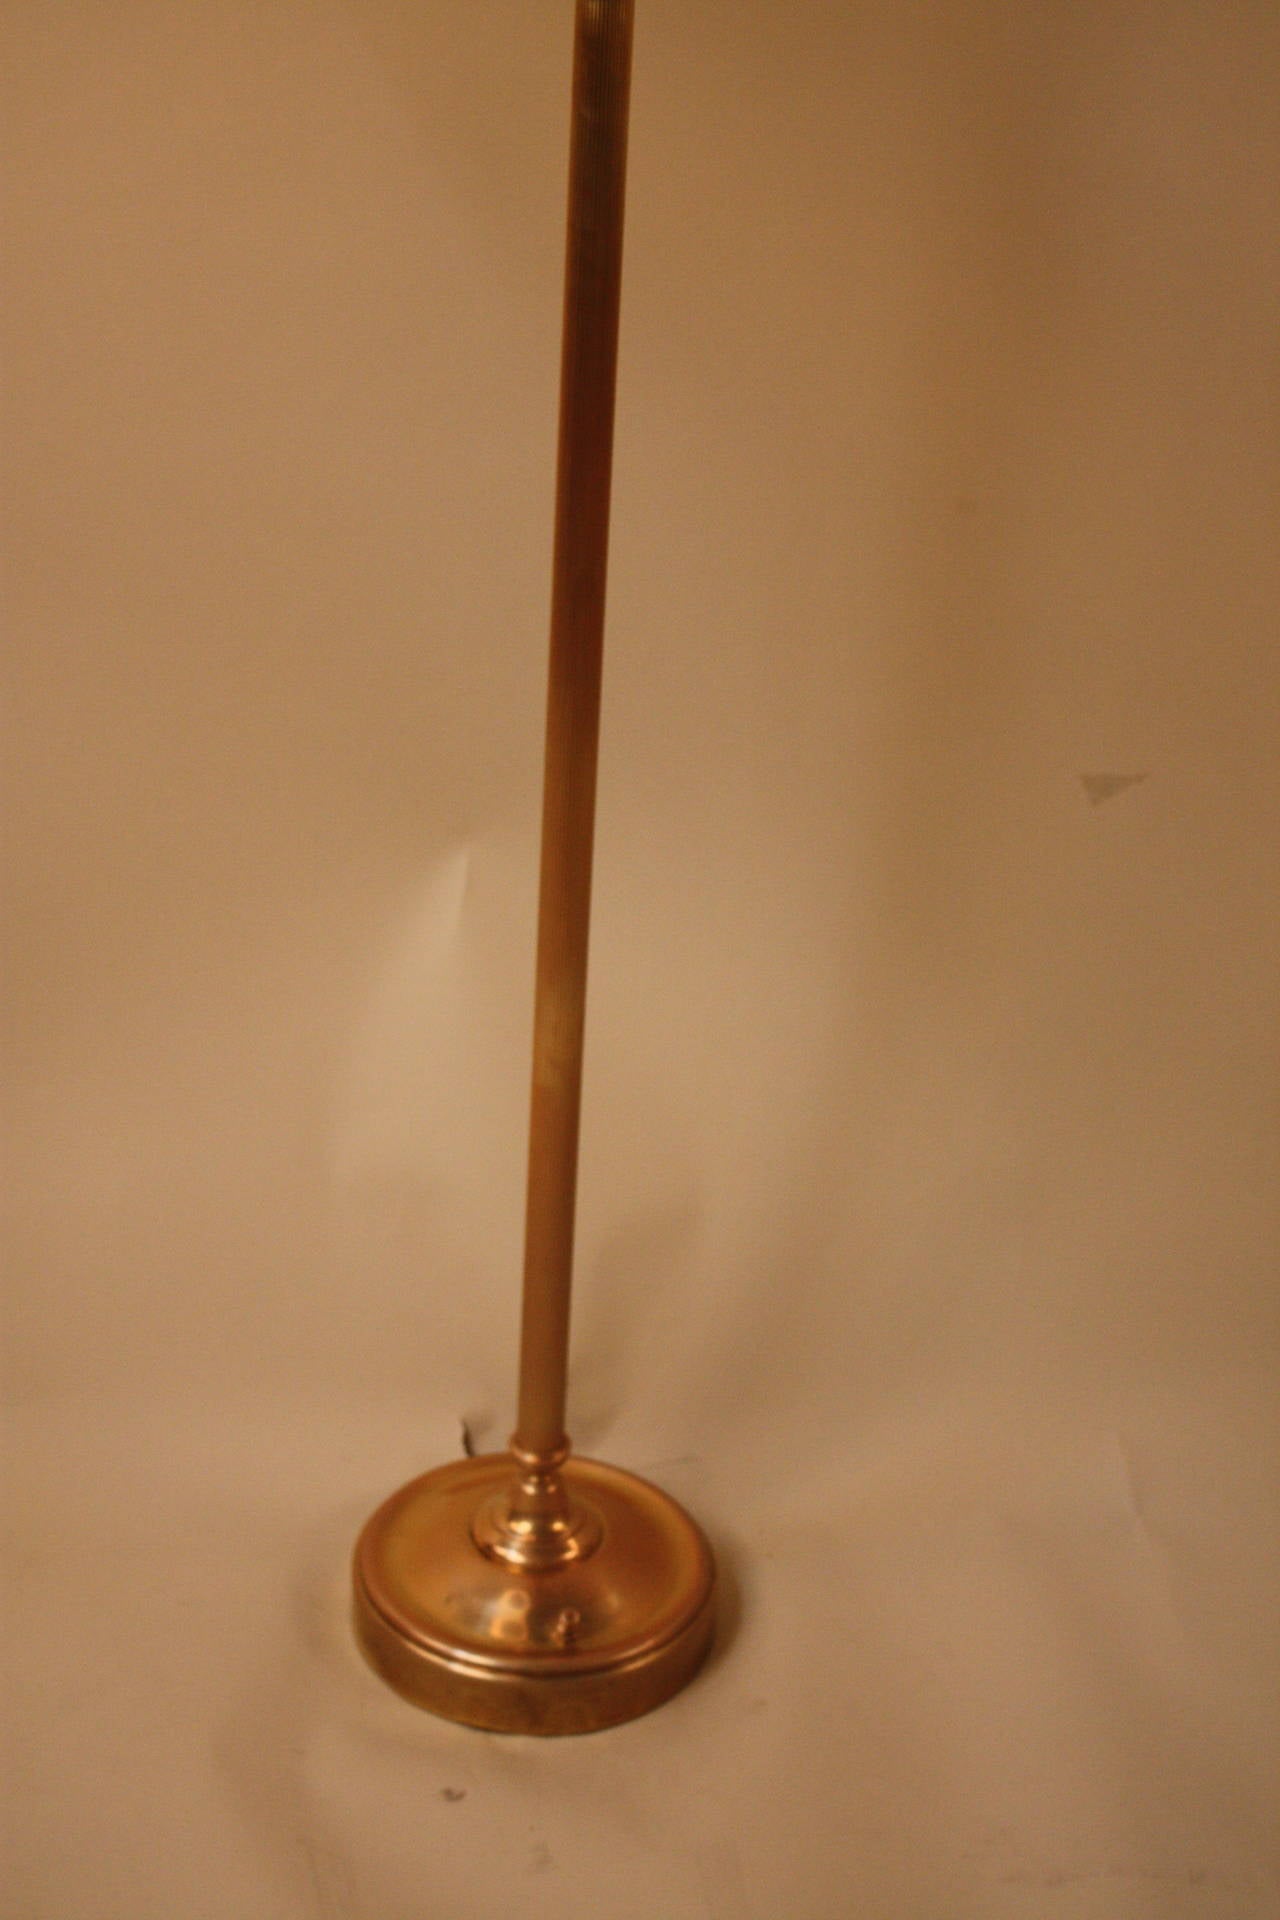 Simple but elegant swing arm adjustable height bronze floor lamp.
Height is 57